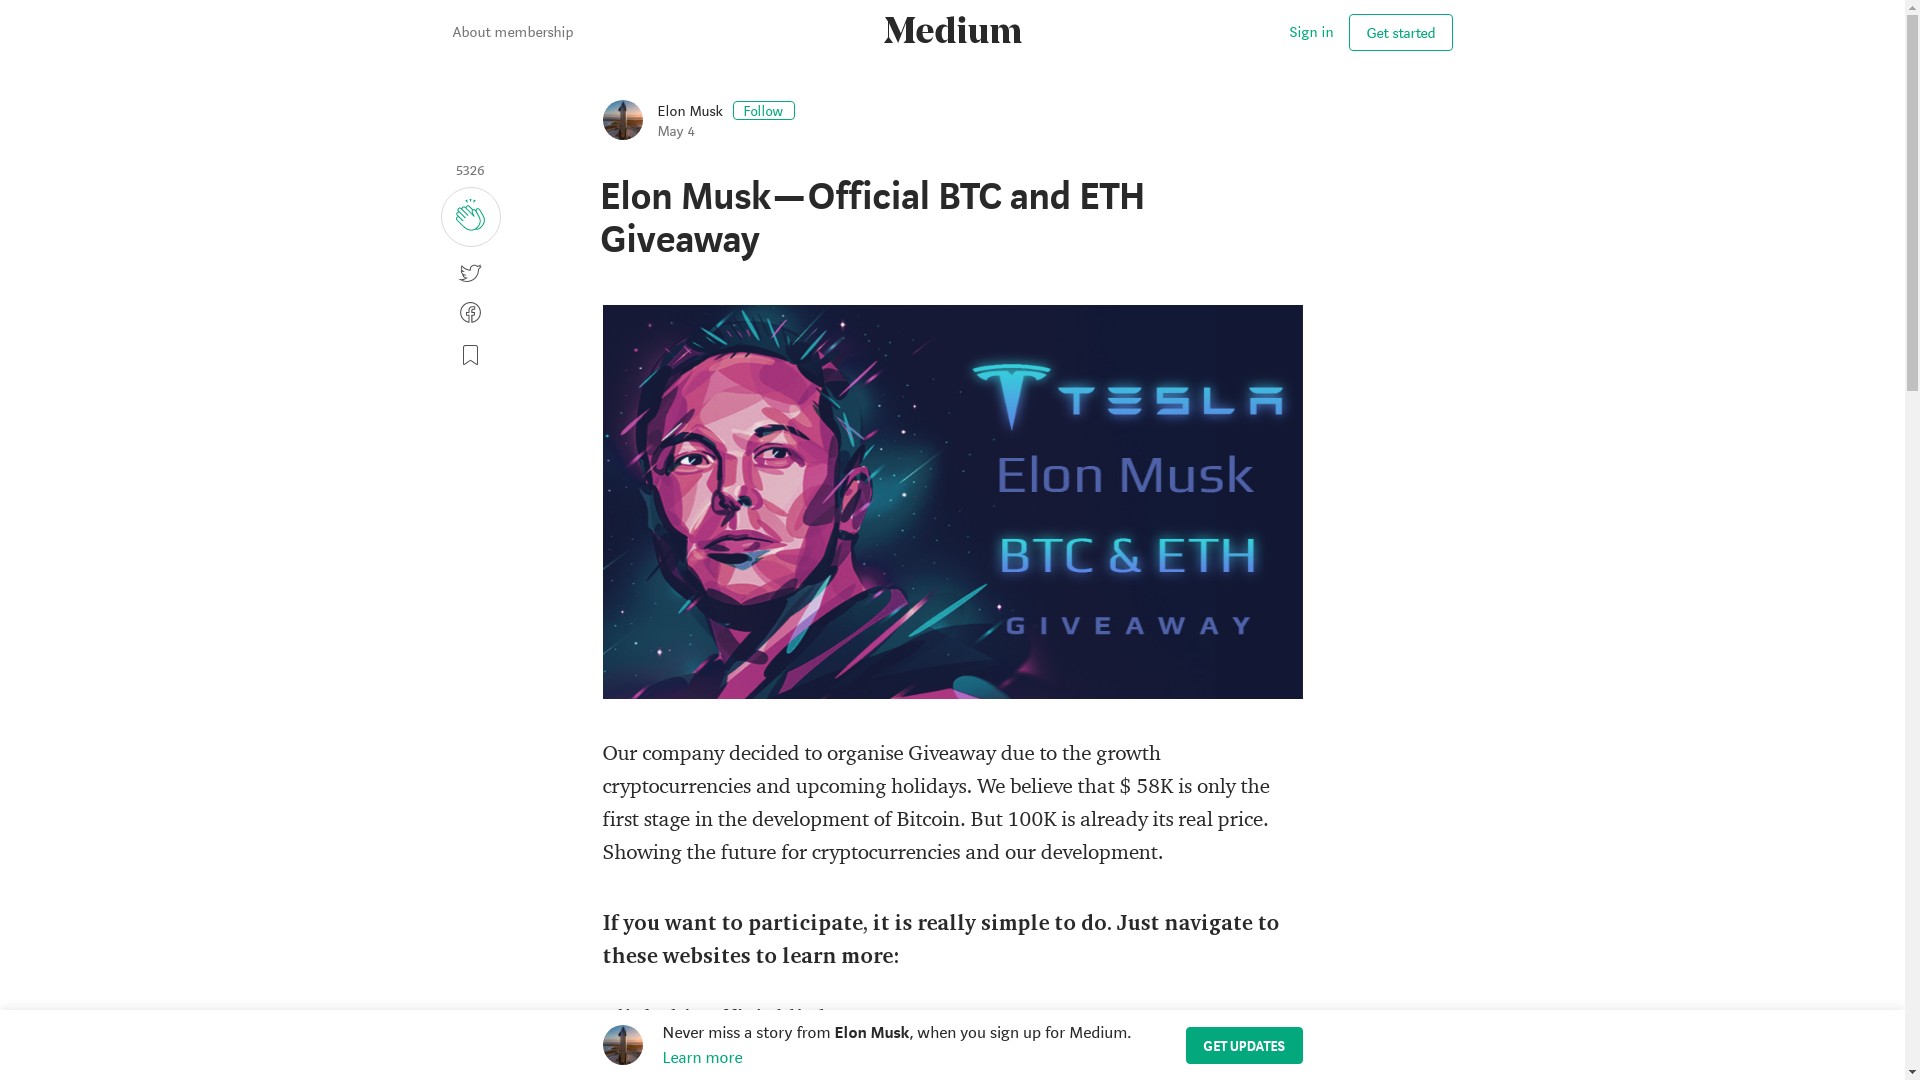 Dropmusk.ug Fake Elon Musk  BTC and ETH Giveaway Scam